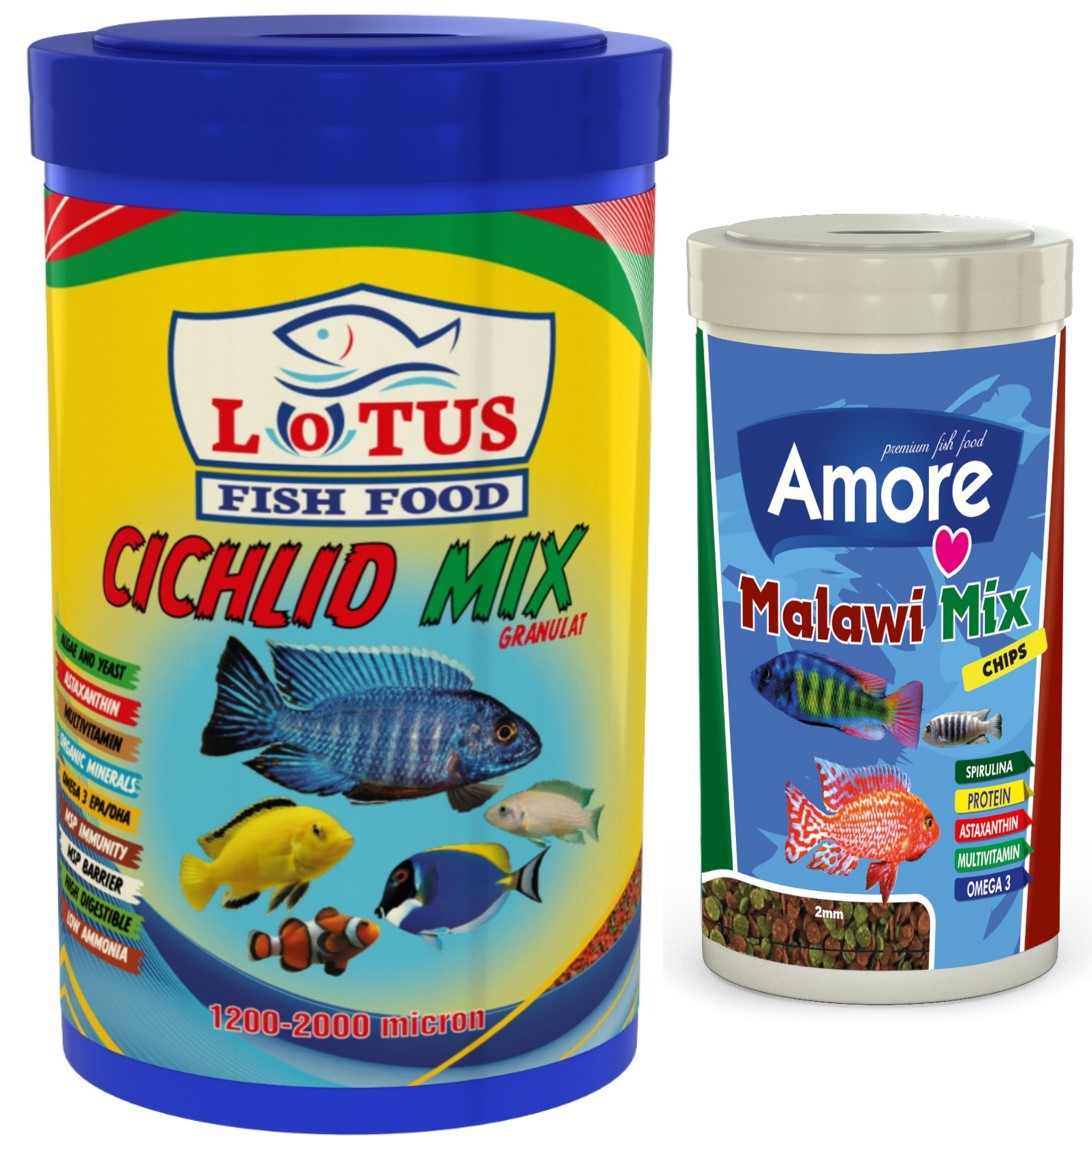 Cichlid Mix 1000ml ve Amore Malawi Mix Chips 250ml Akvaryum Balık Yemi fotograf